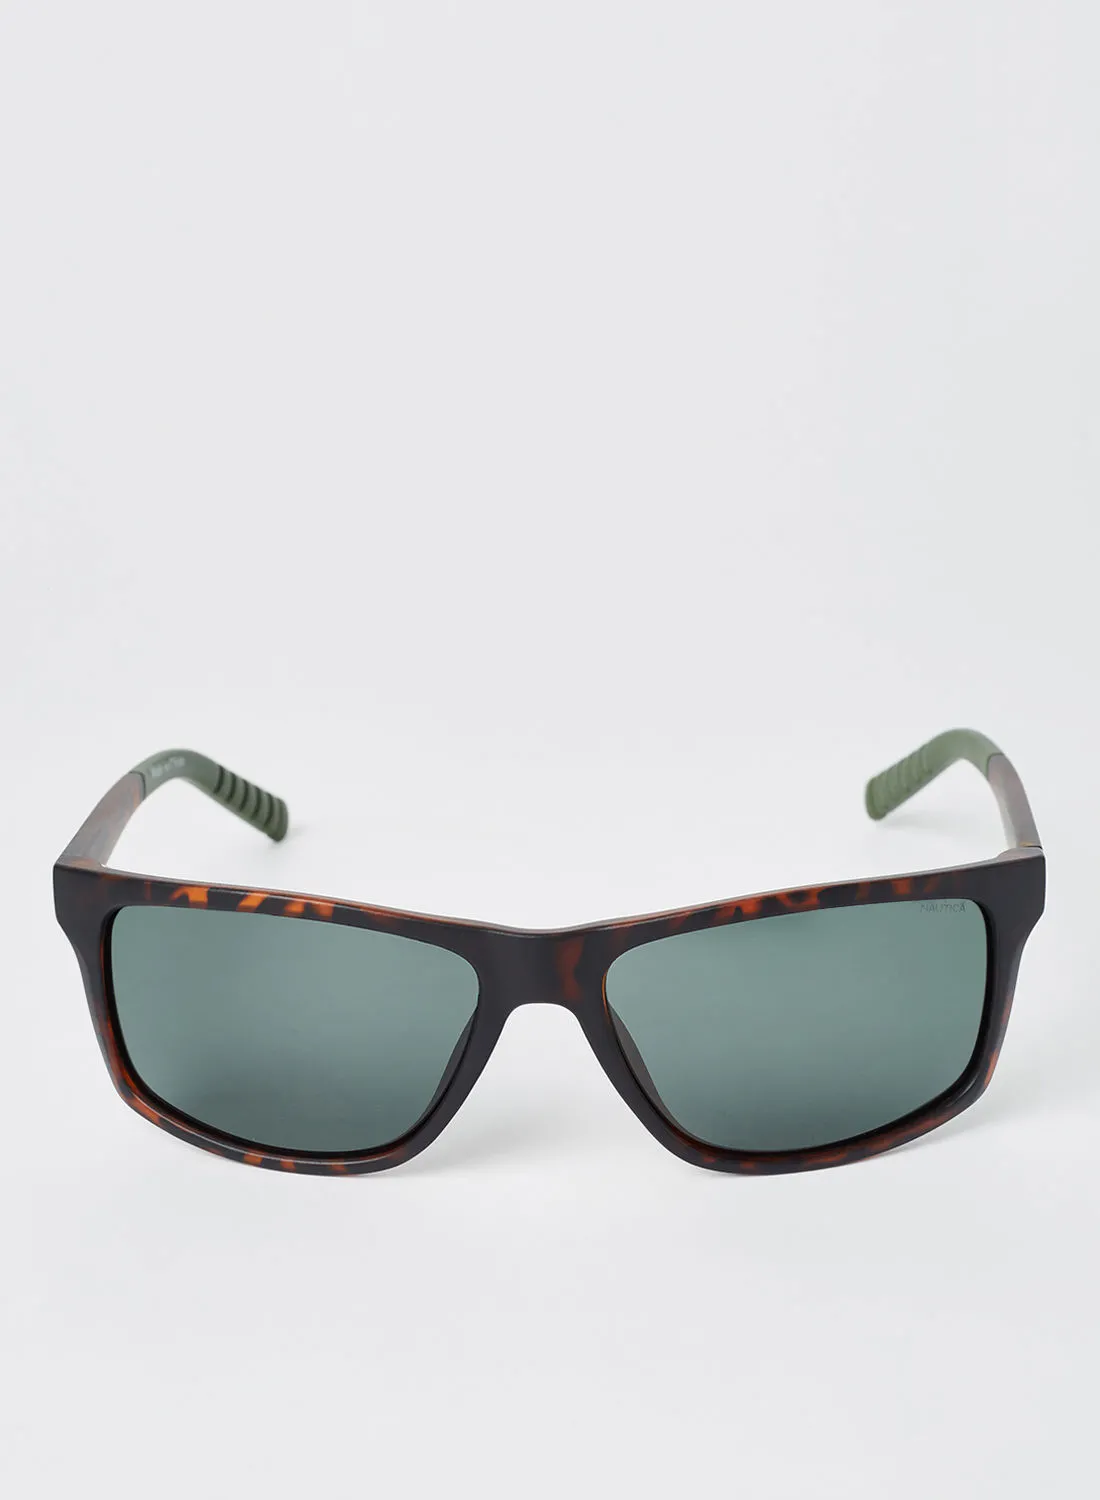 NAUTICA Men's Full Rim Injected Rectangle Sunglasses - Lens Size: 62 mm